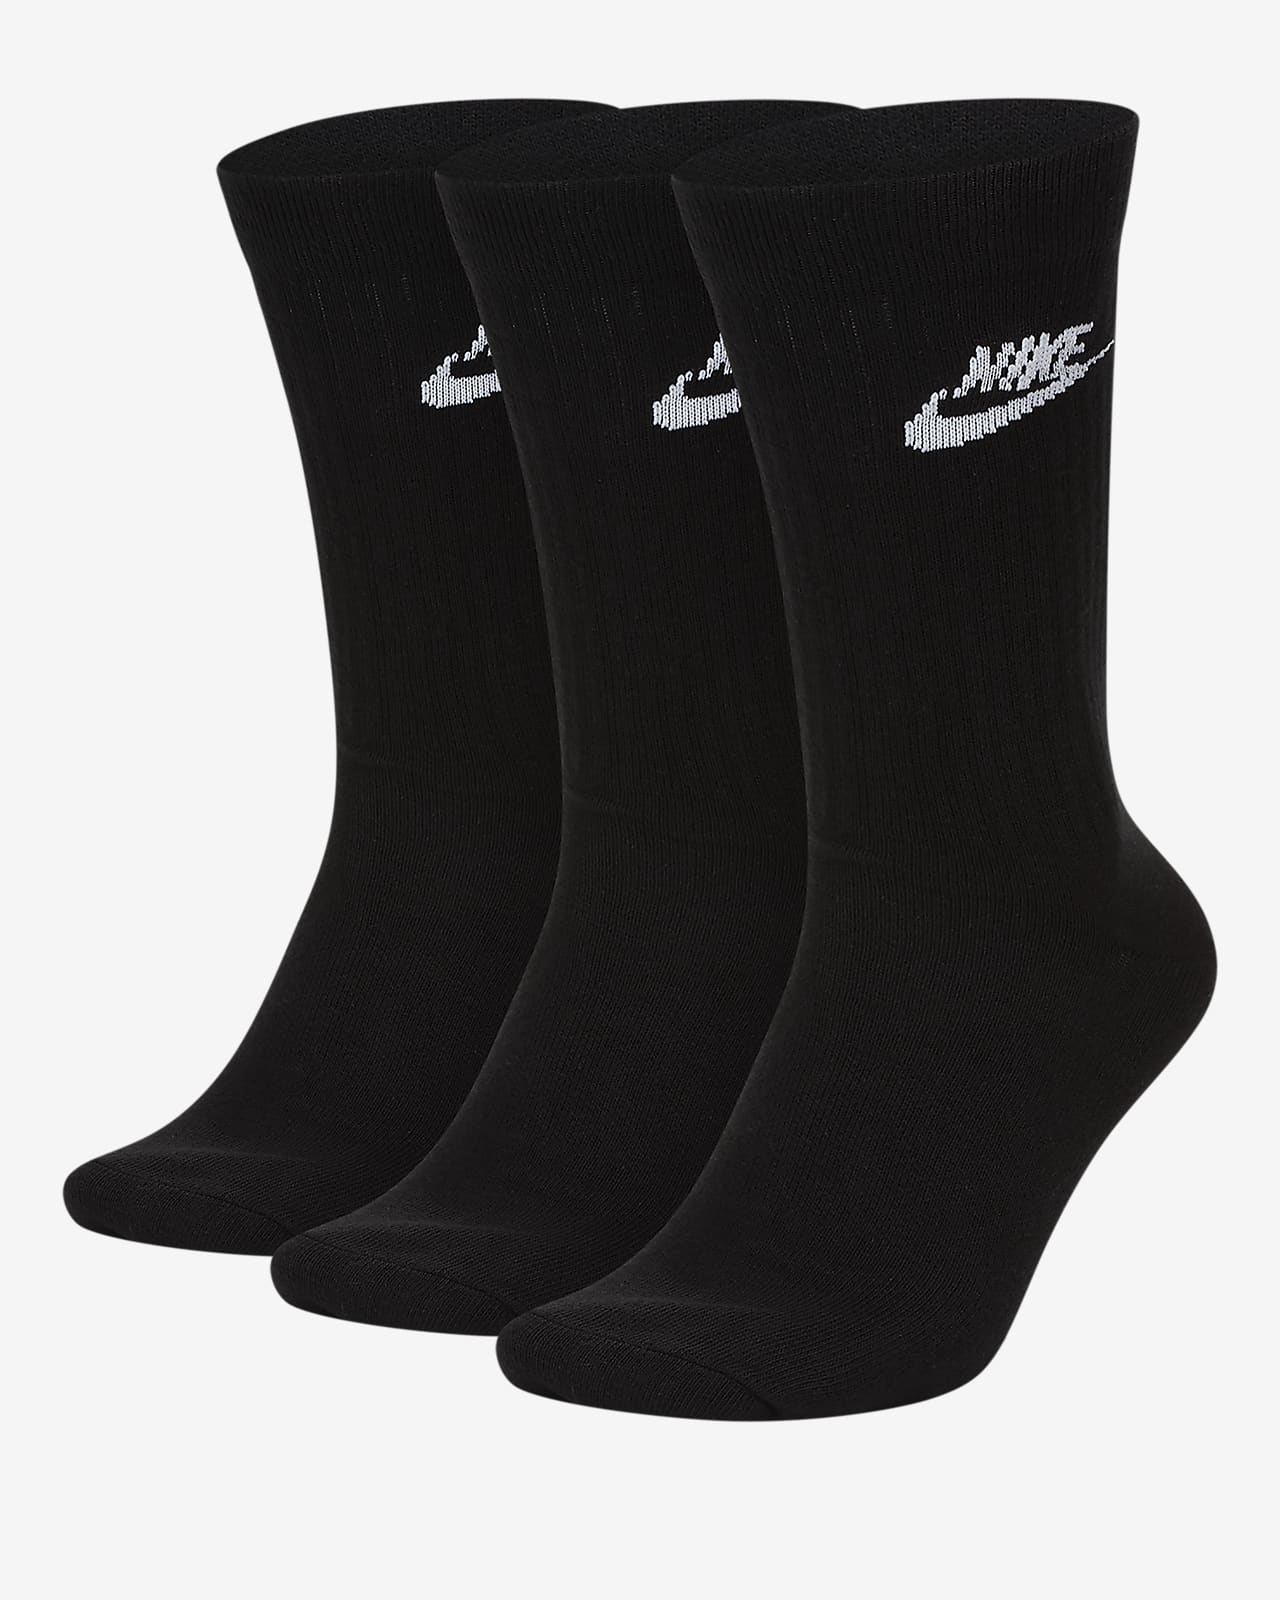 black friday nike socks